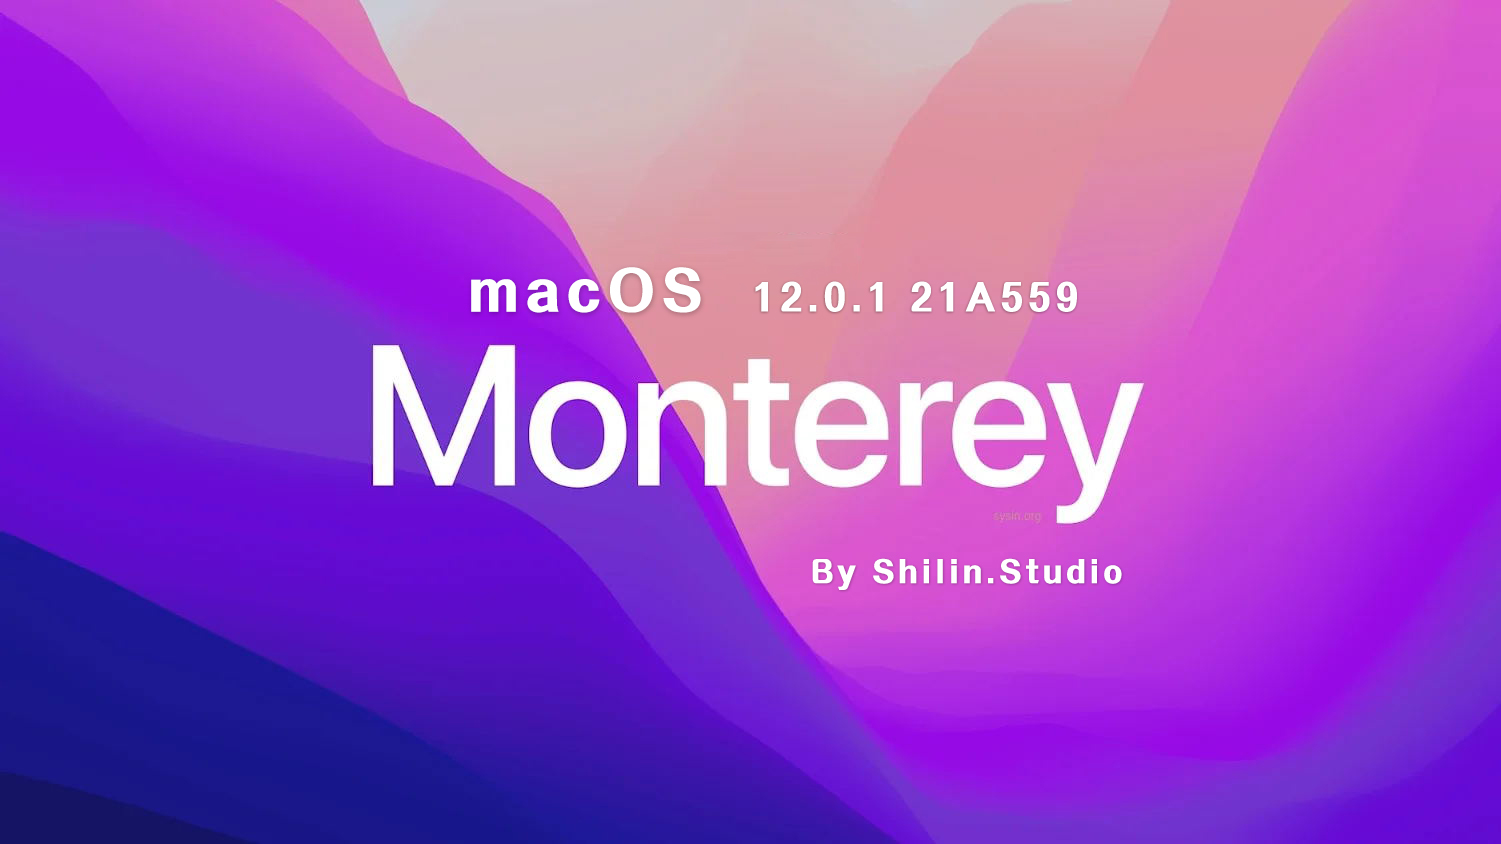 [macOS]macOS_Monterey_12.0.1_21A559_For_Shilin.Studio.iso可引导可虚拟机安装镜像包（已修复引导并优化）